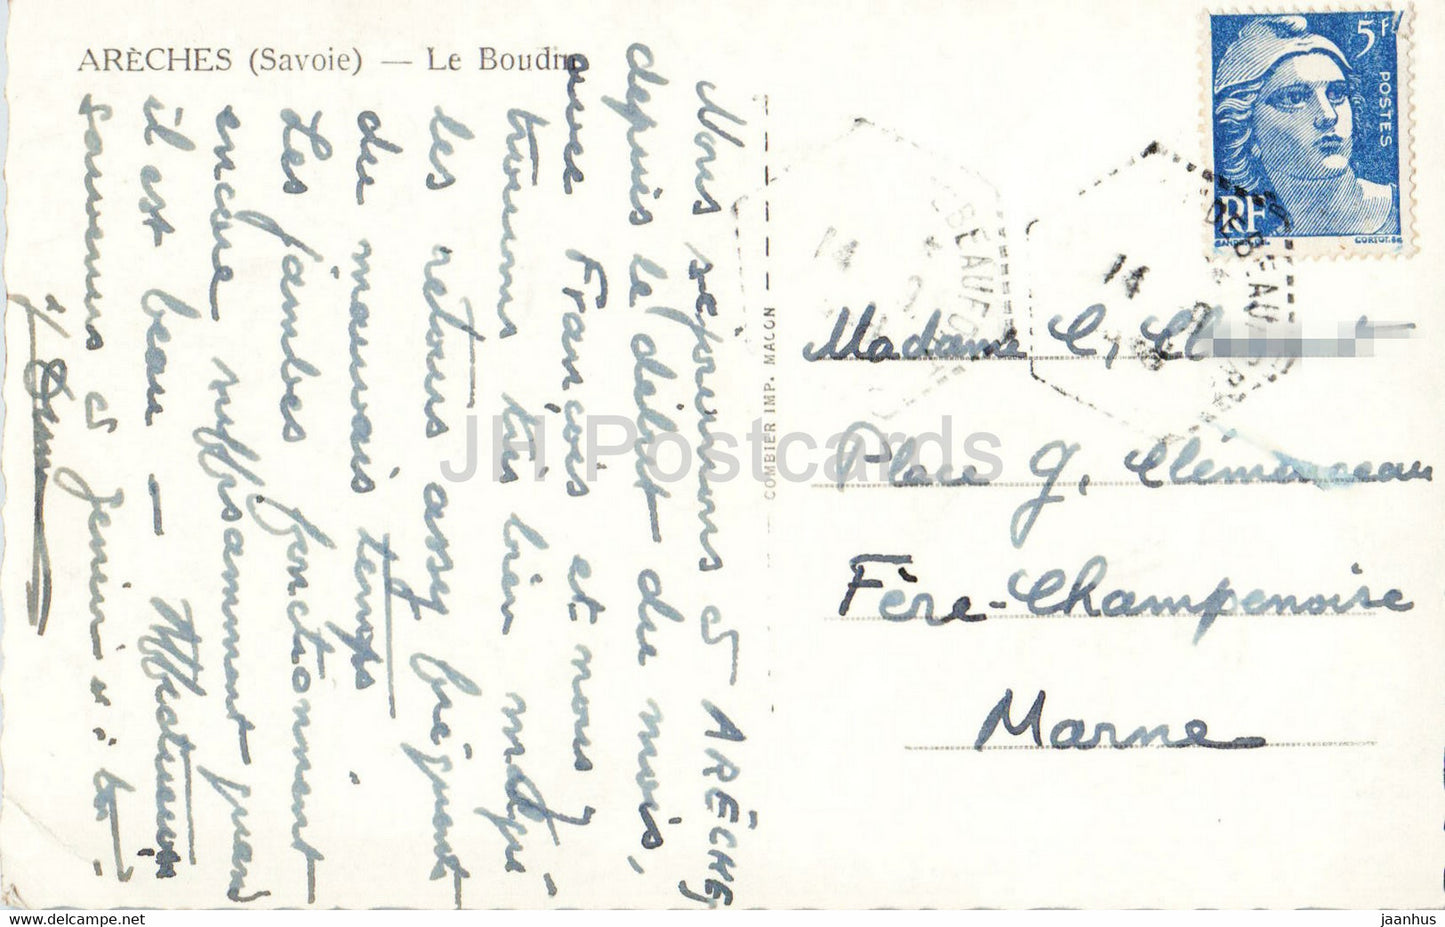 Areches - Le Boudin - alte Postkarte - Frankreich - gebraucht